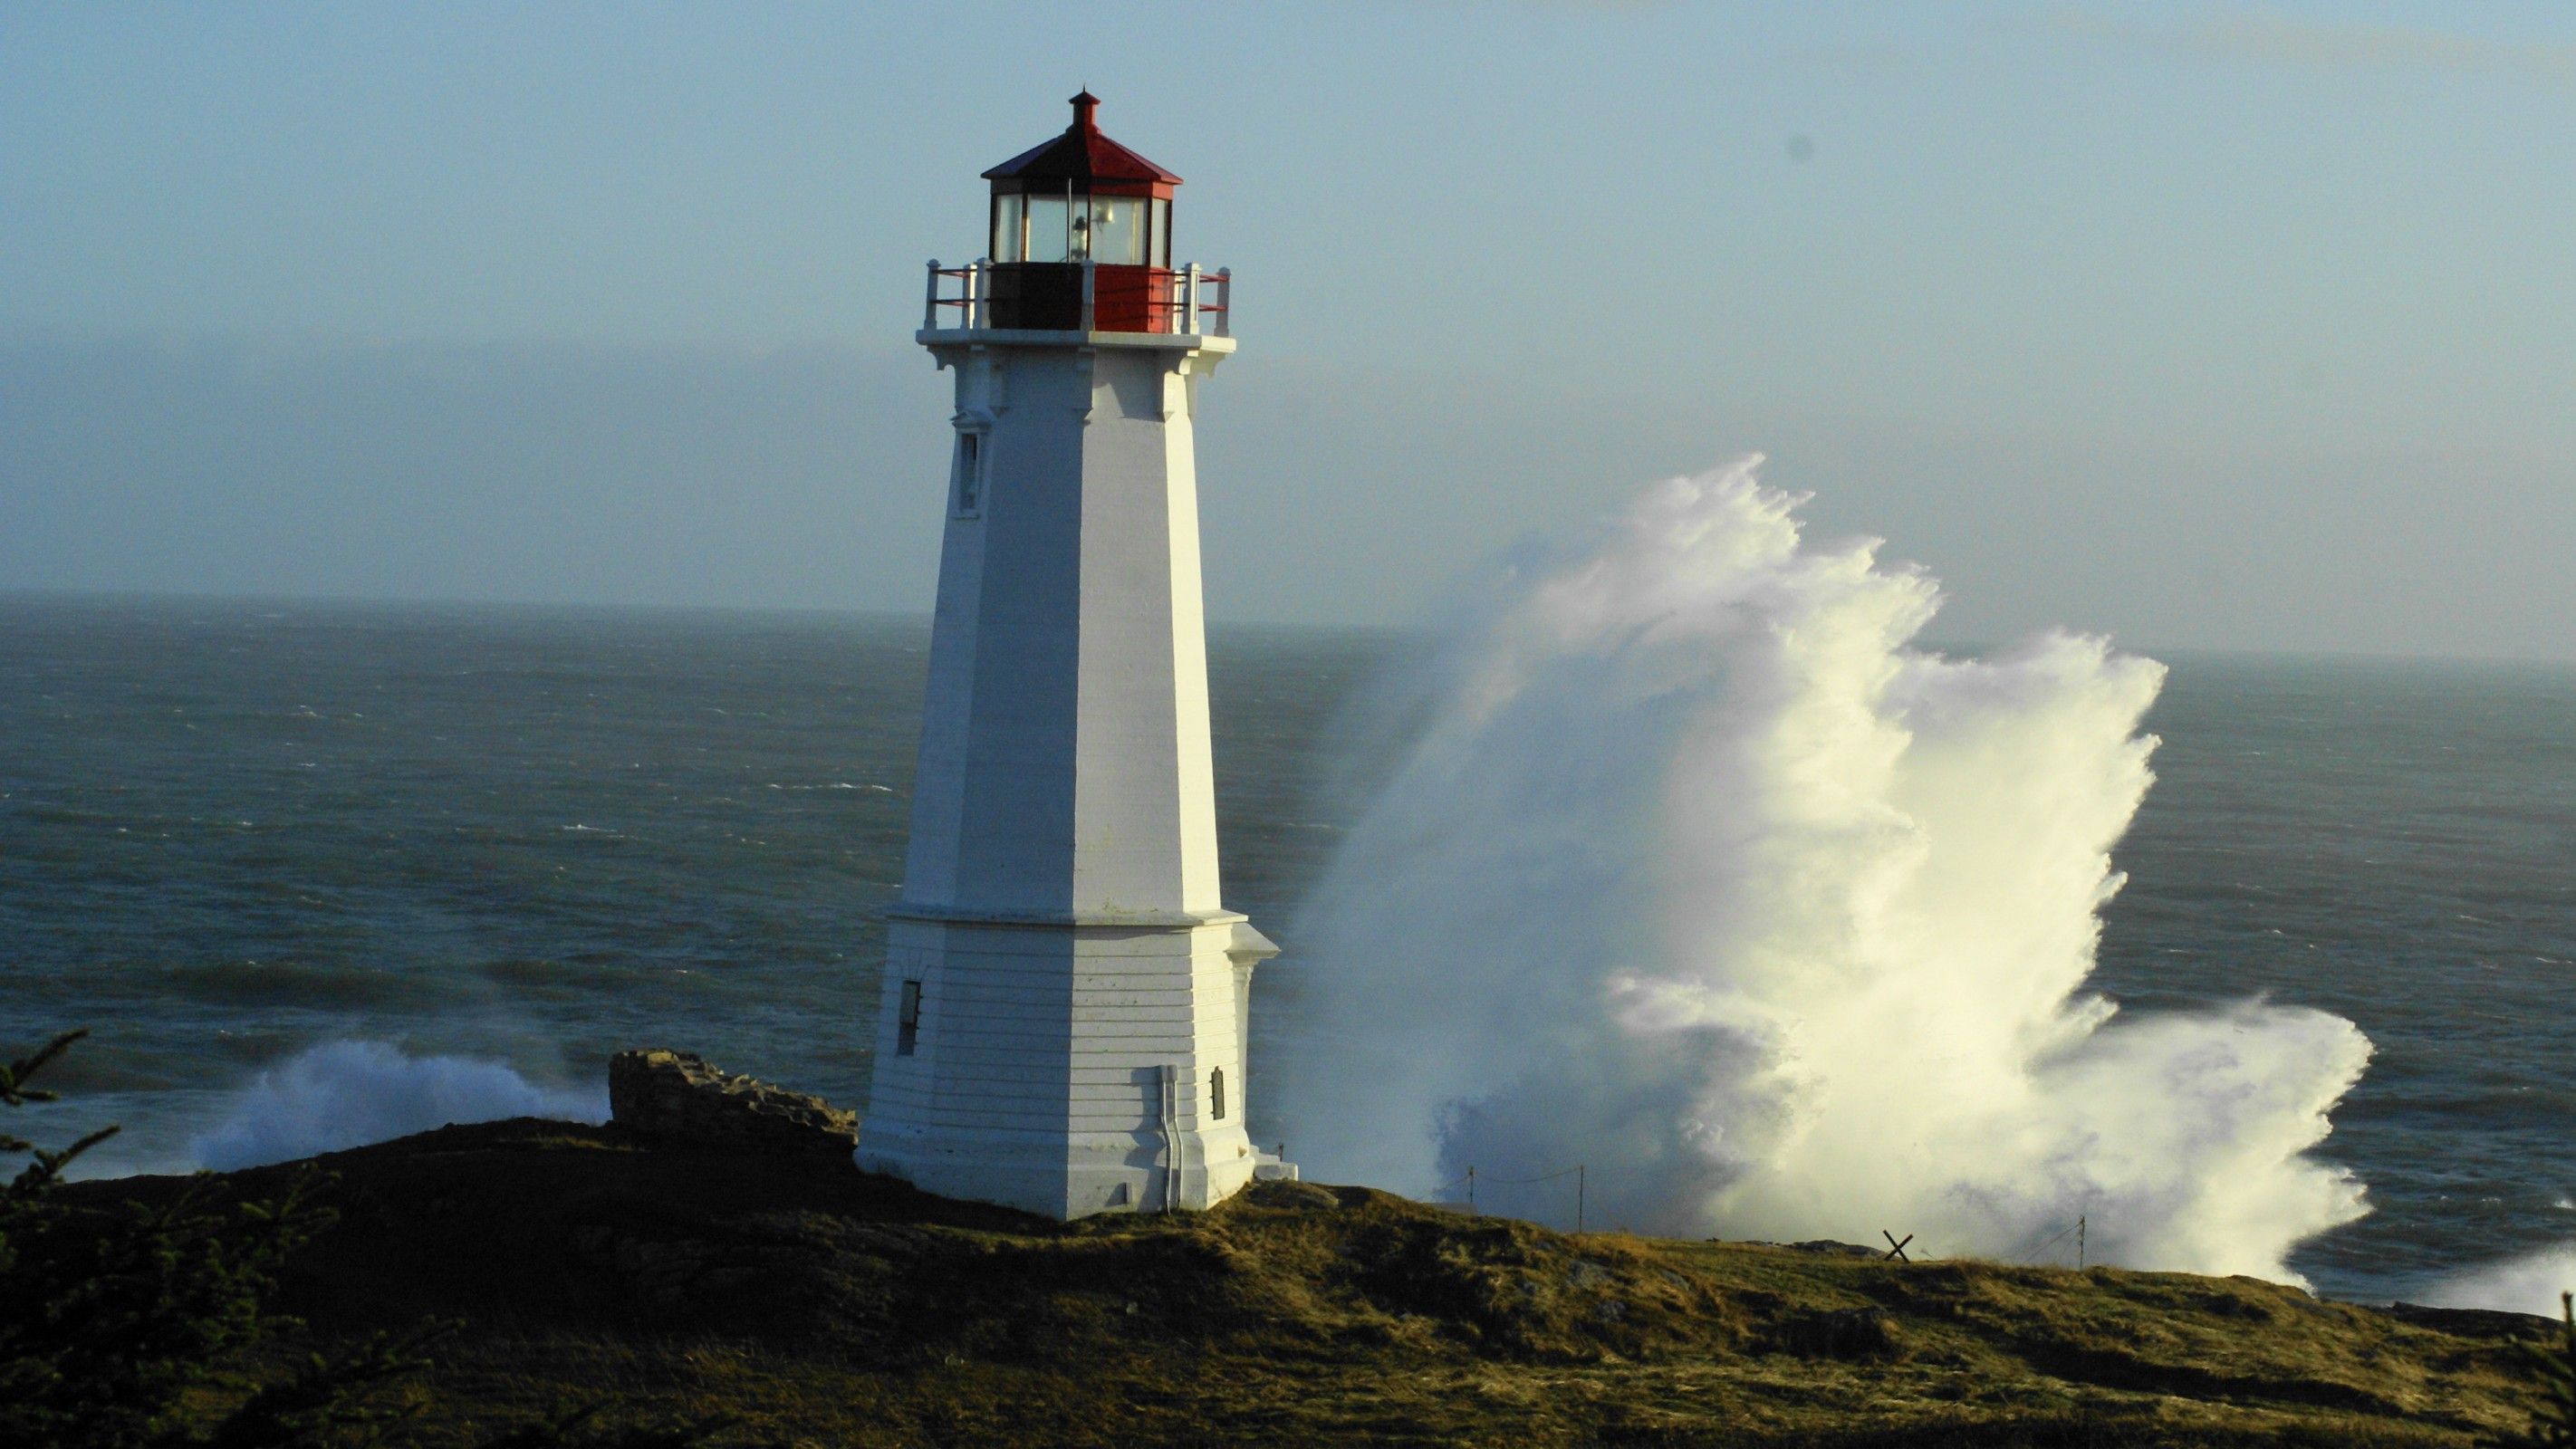 Louisbourg Lighthouse - Louisbourg, Nova Scotia